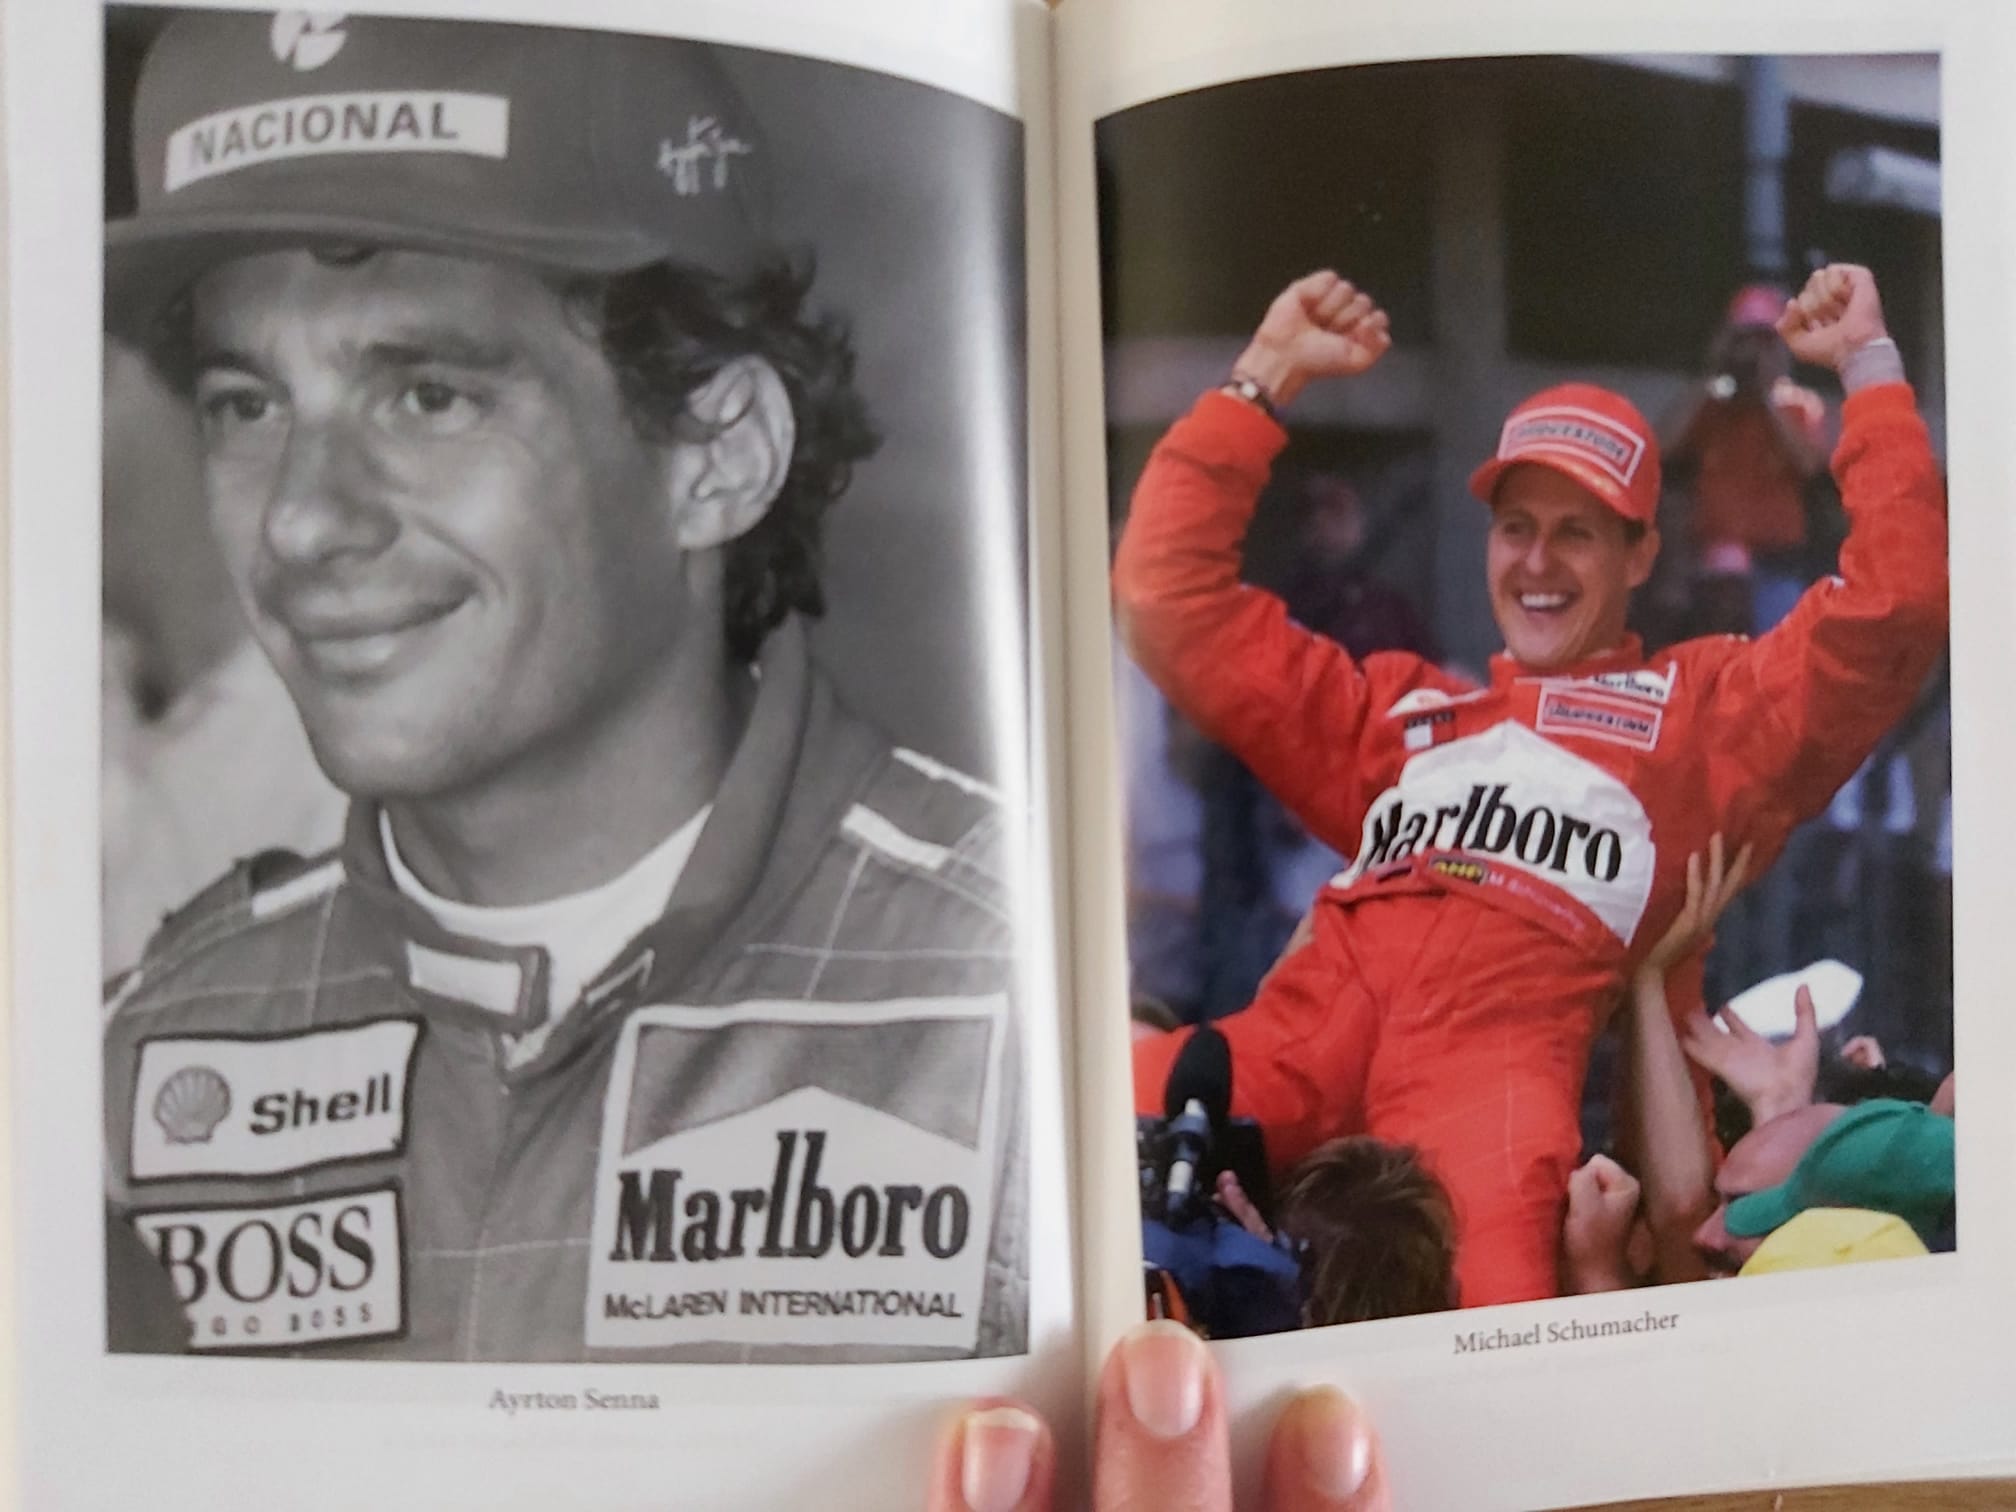 Senna en Schumacher